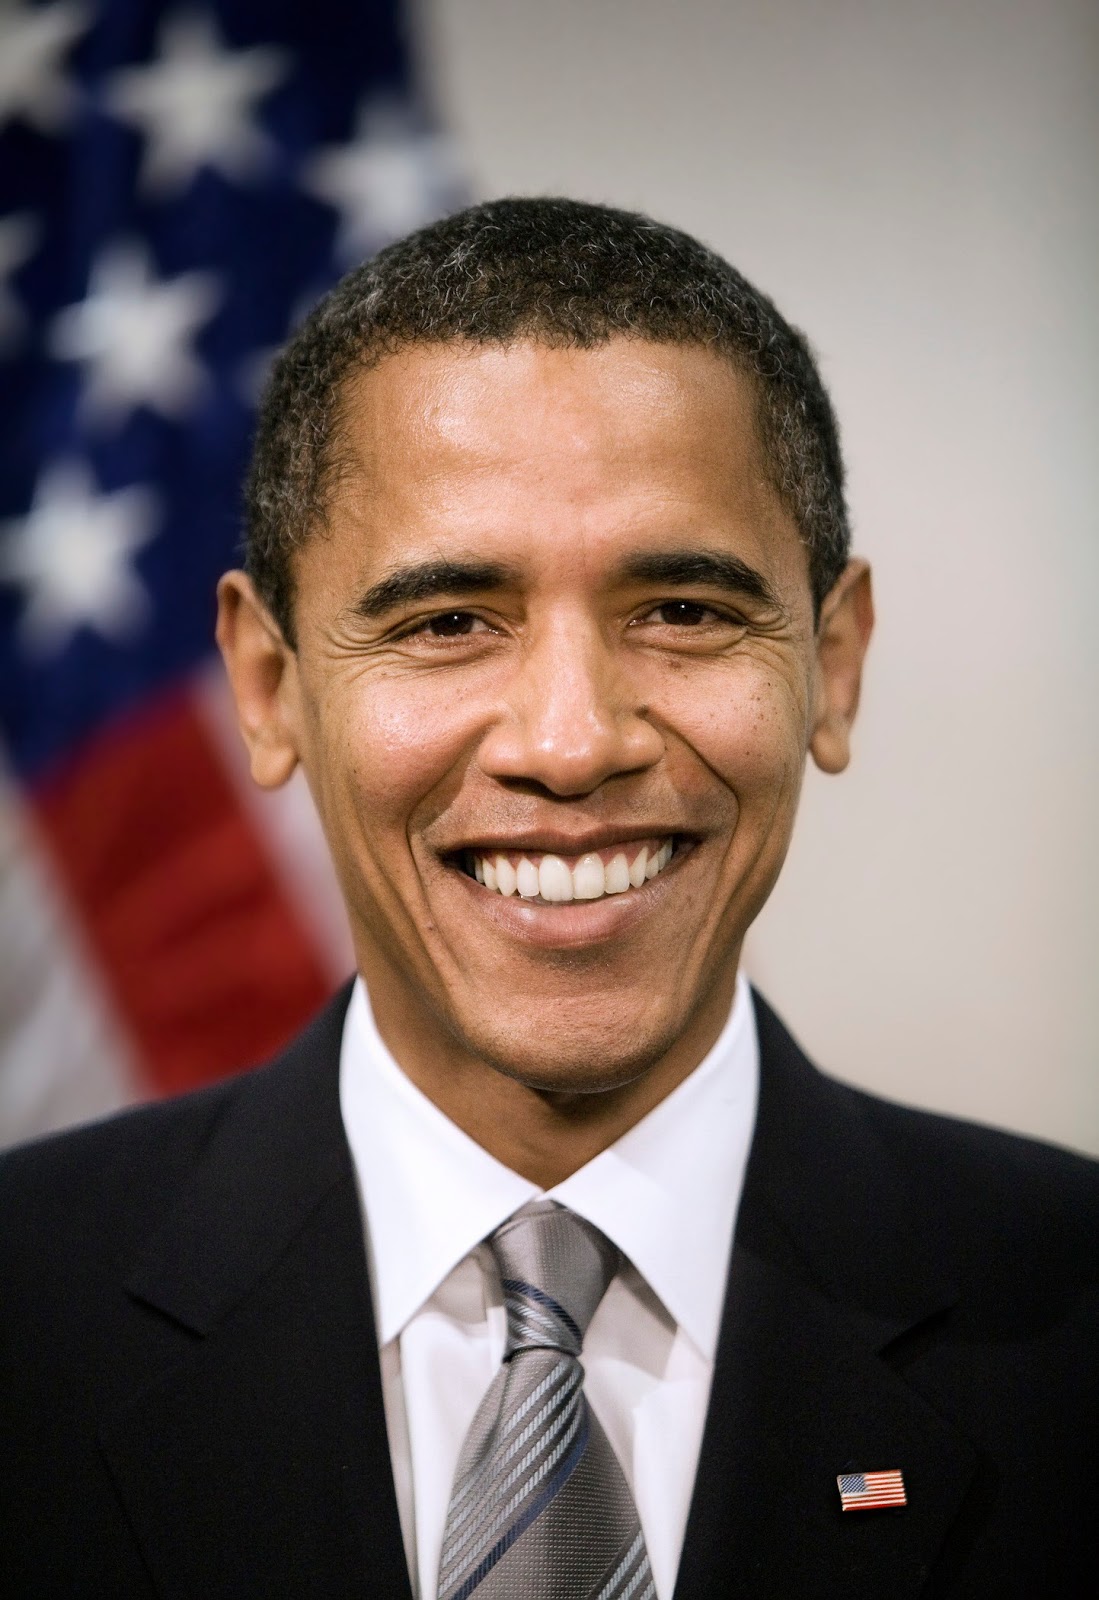 Barack Obama Bulge